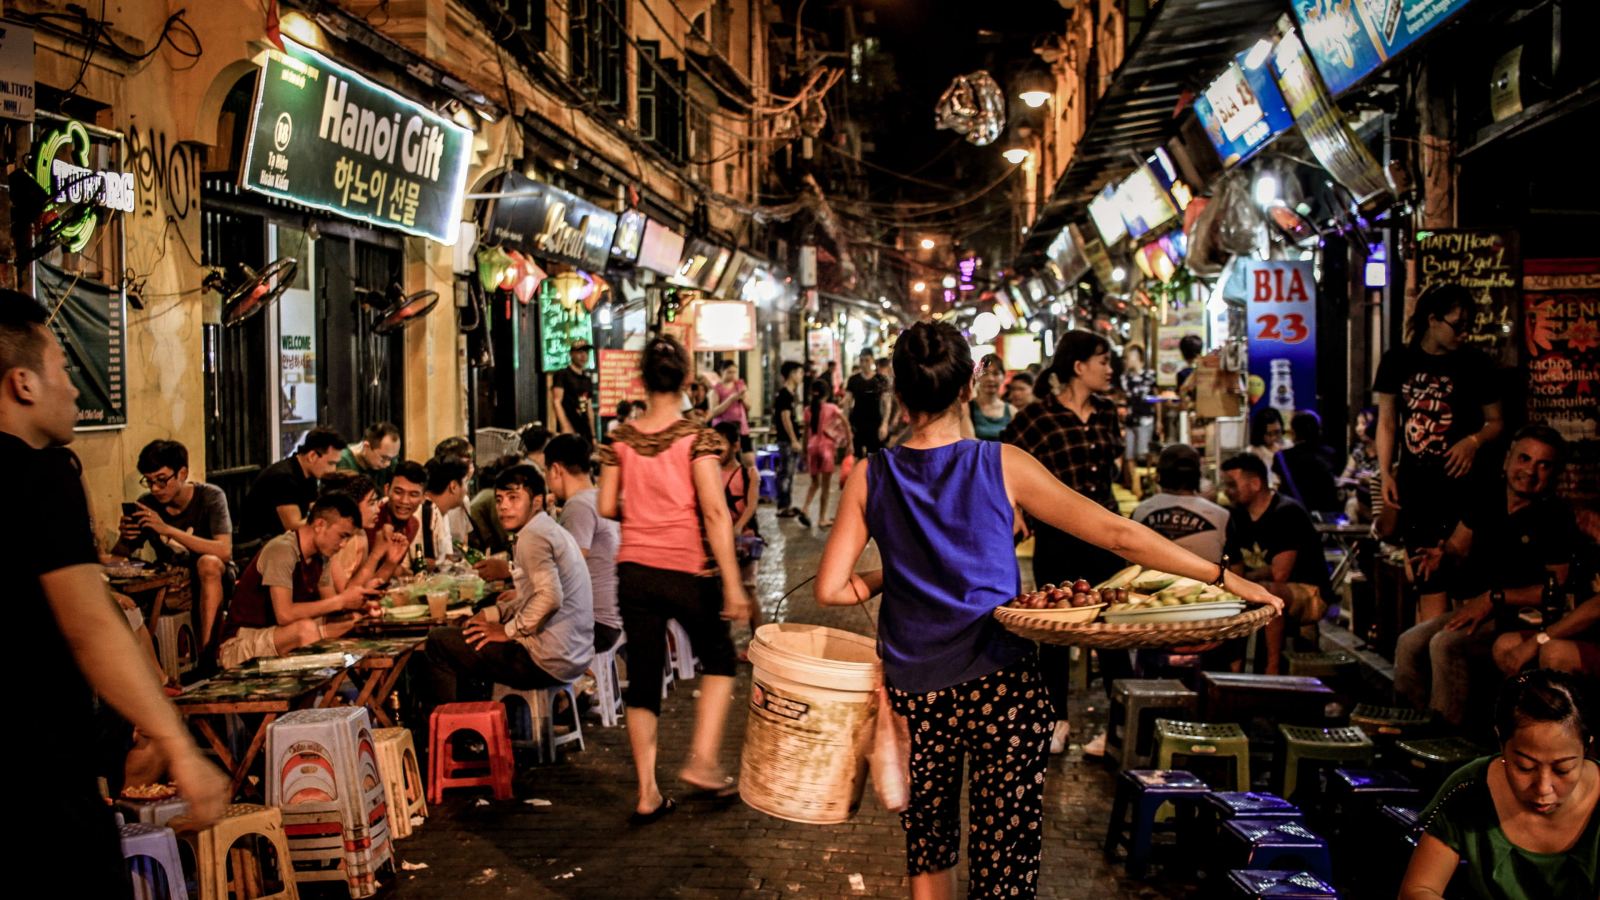 Hanoi Night street - food stands